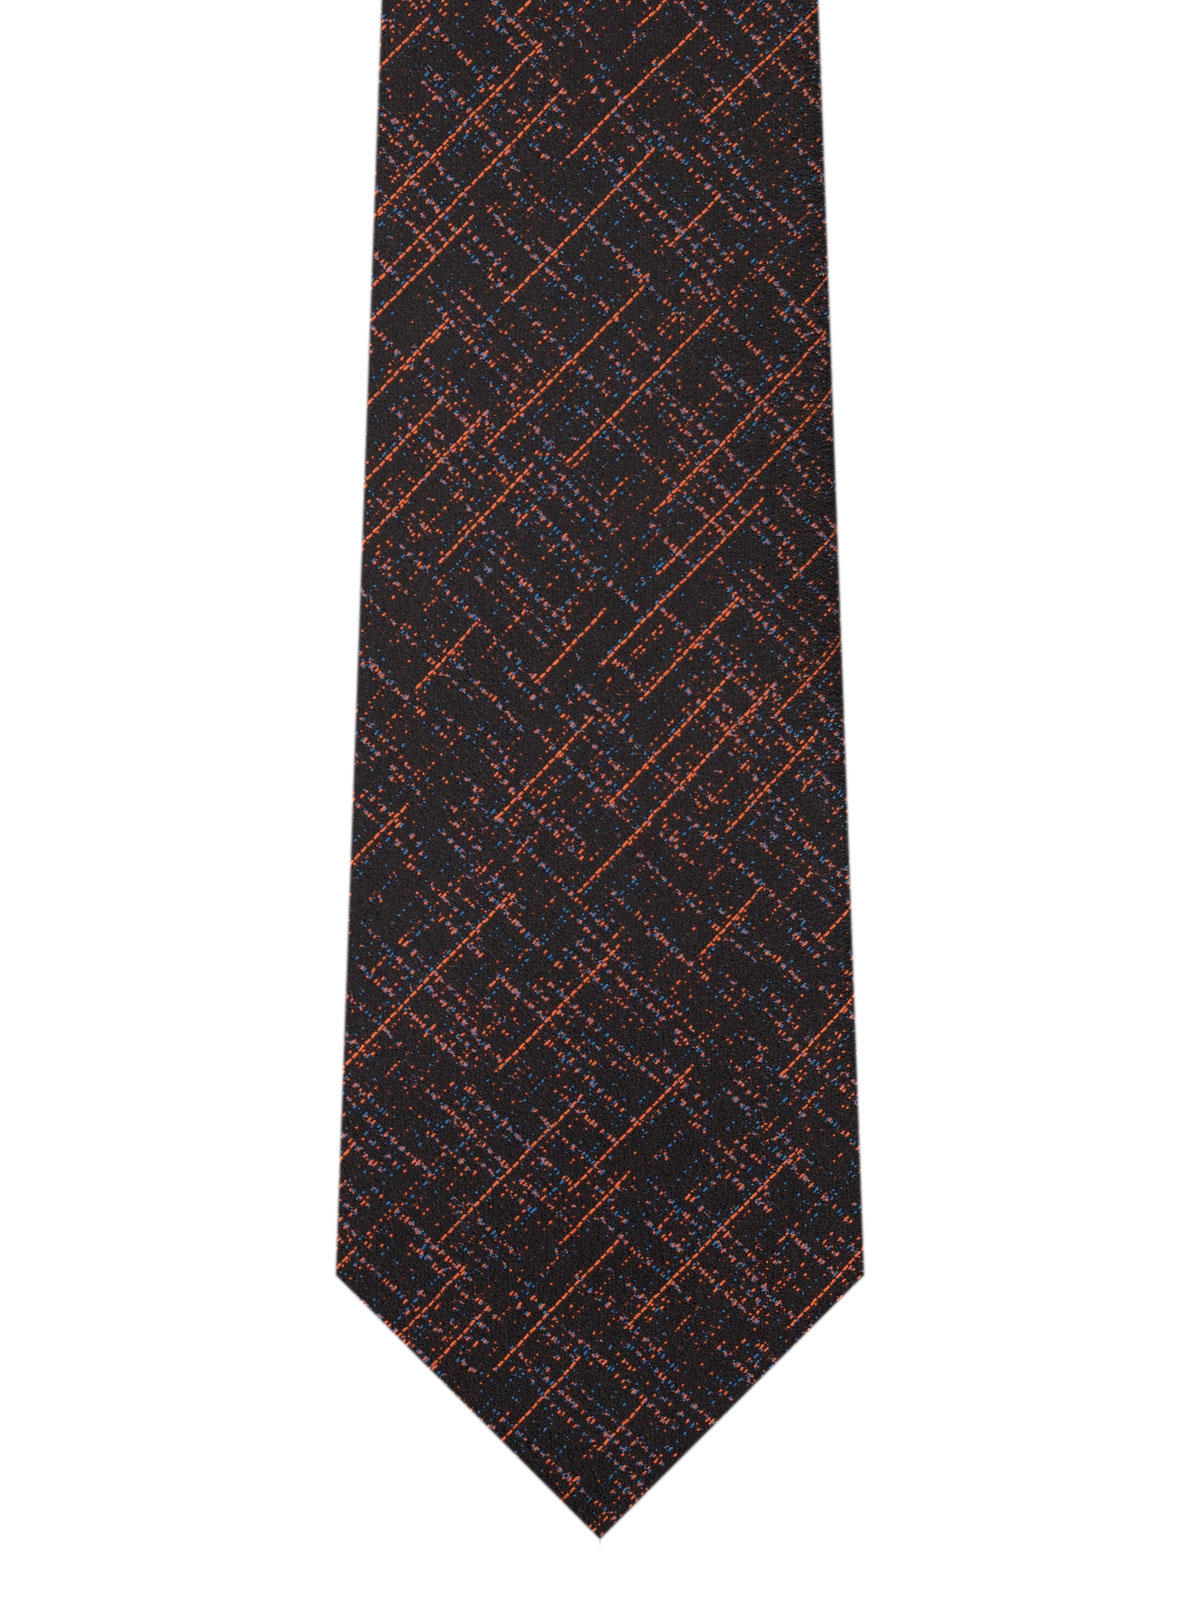 Necktie black melange with orange lines - 10164 - € 14.06 img2